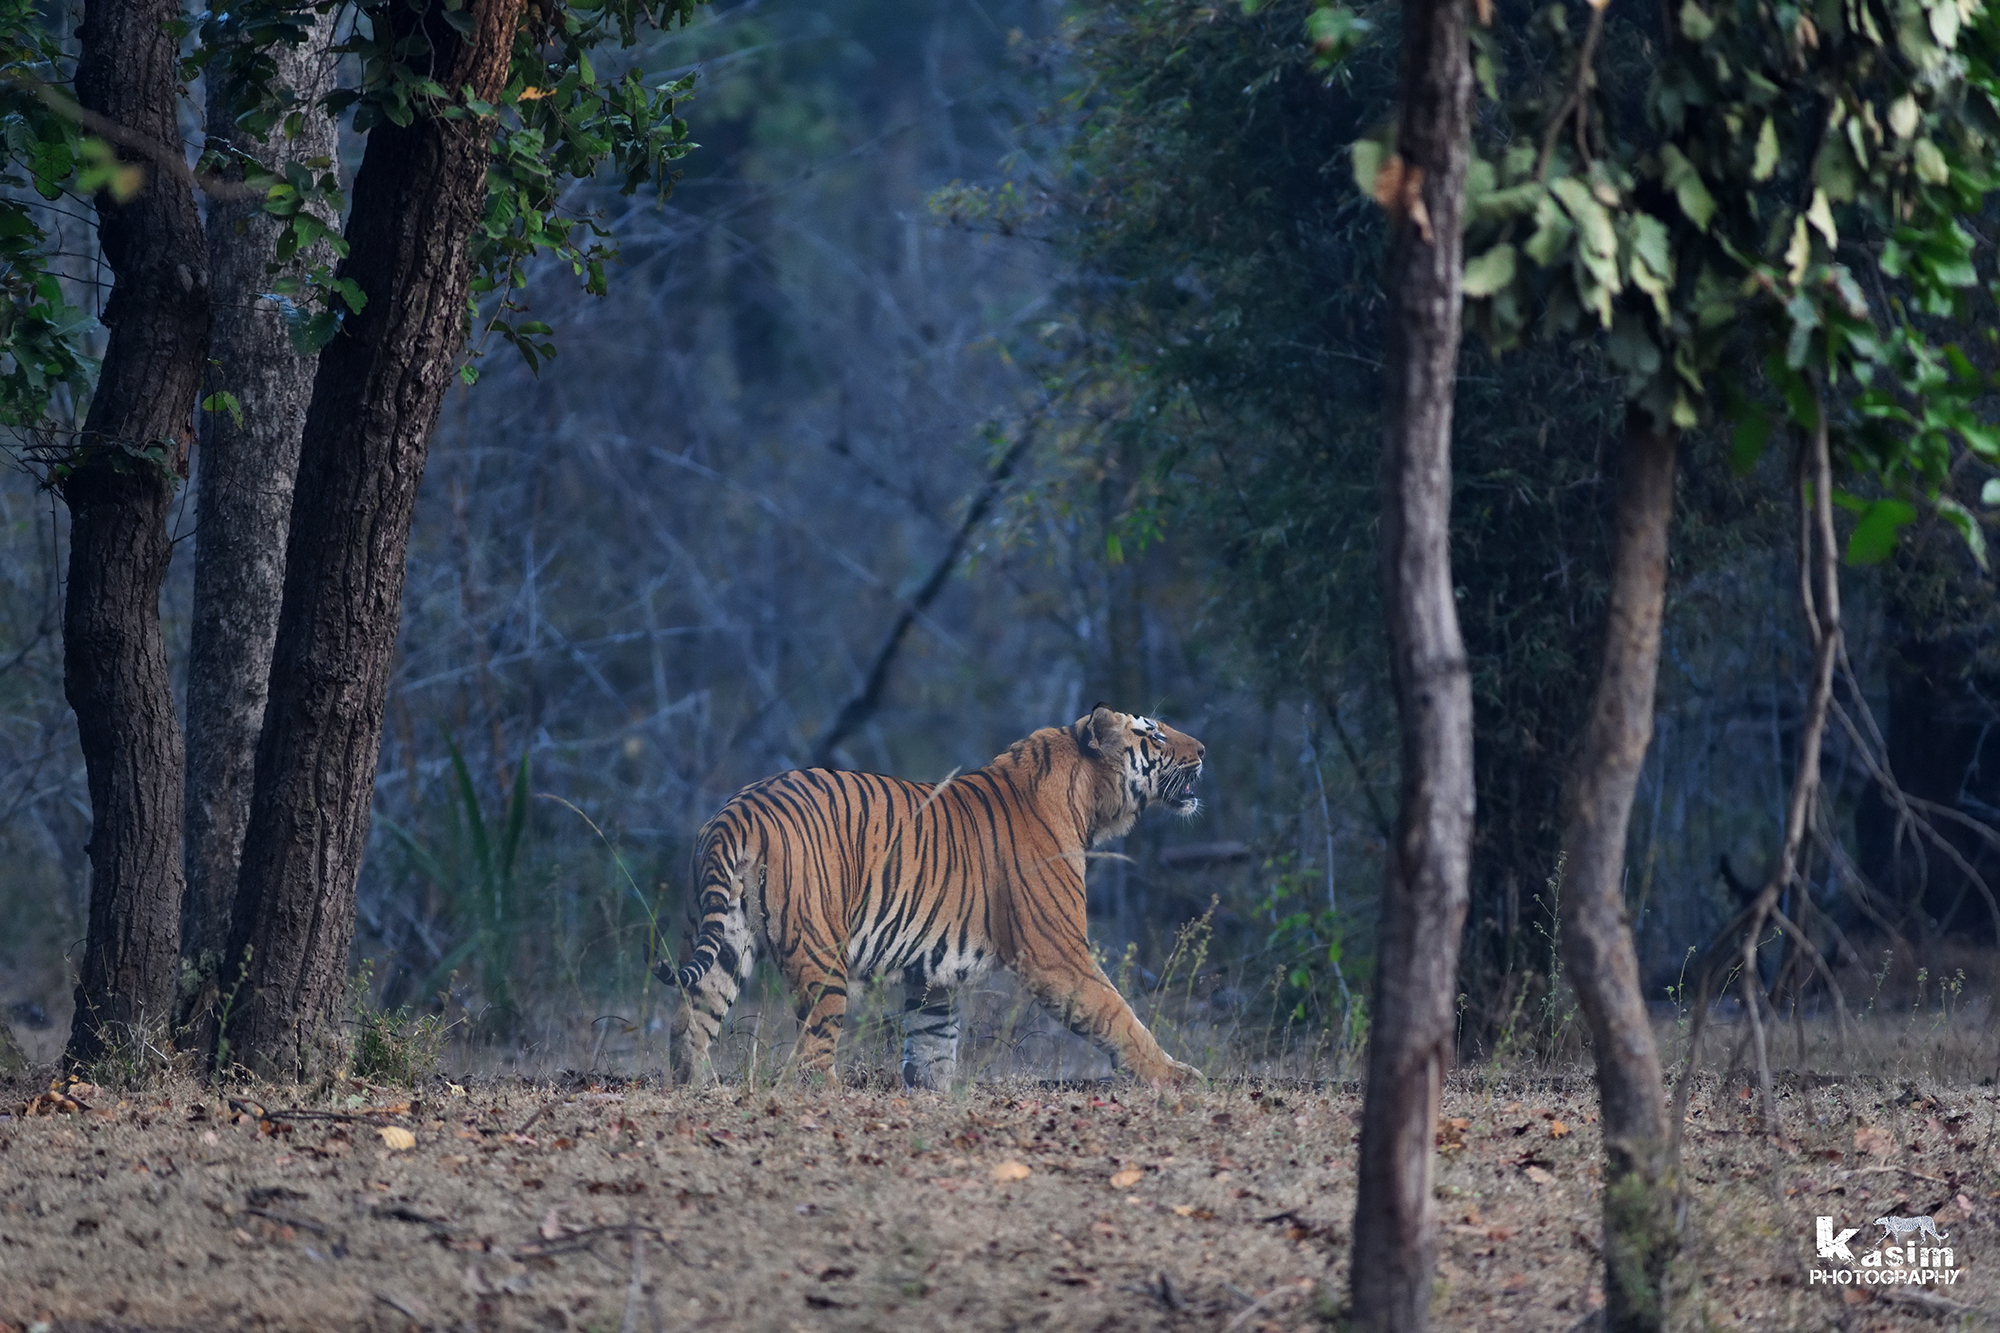 Tiger-Bandhavgarh Tiger Reserve...